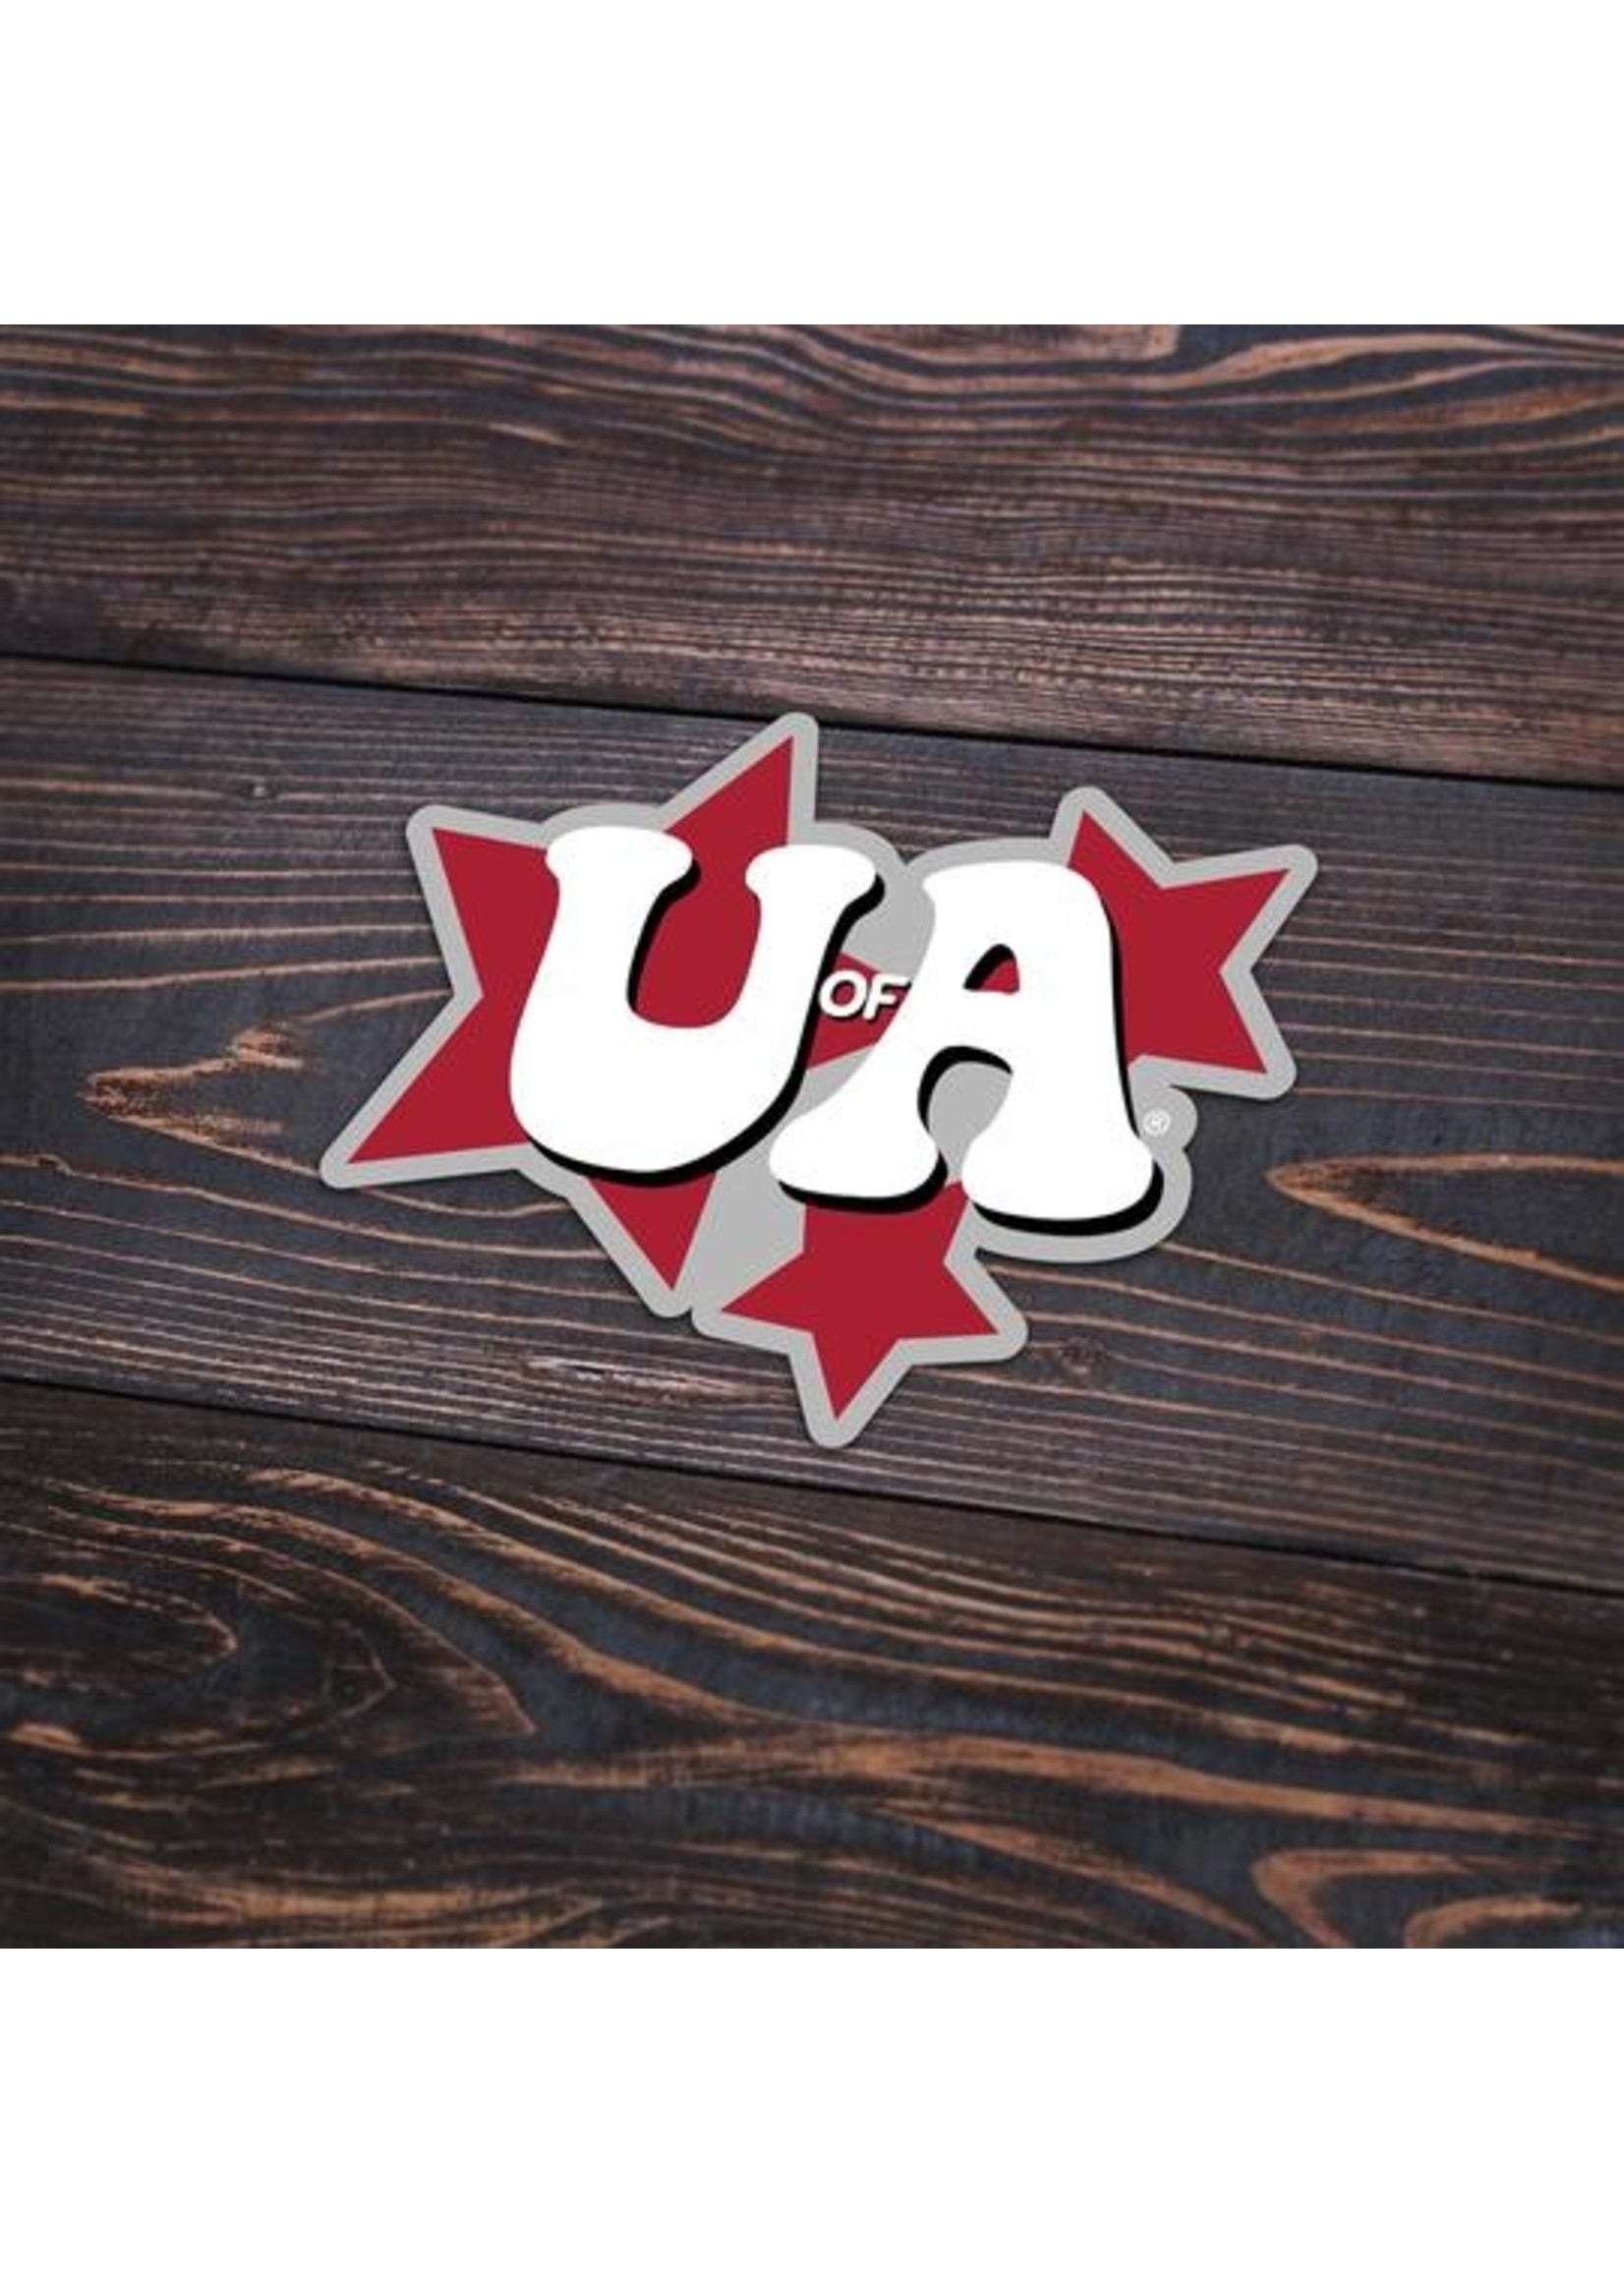 Southern Trend UofA Star Sticker